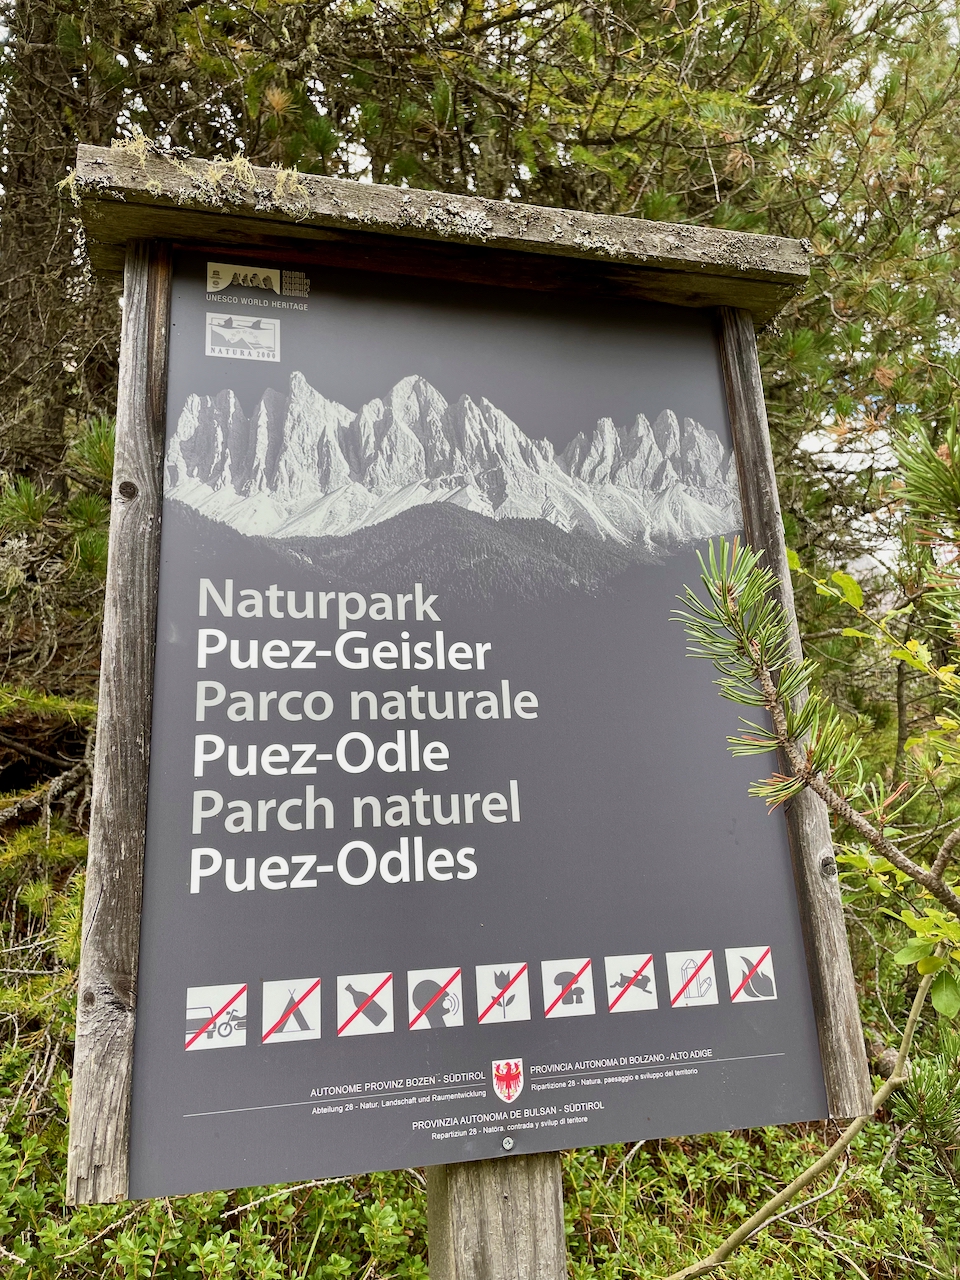 Wir betreten den Naturpark Puez-Geisler